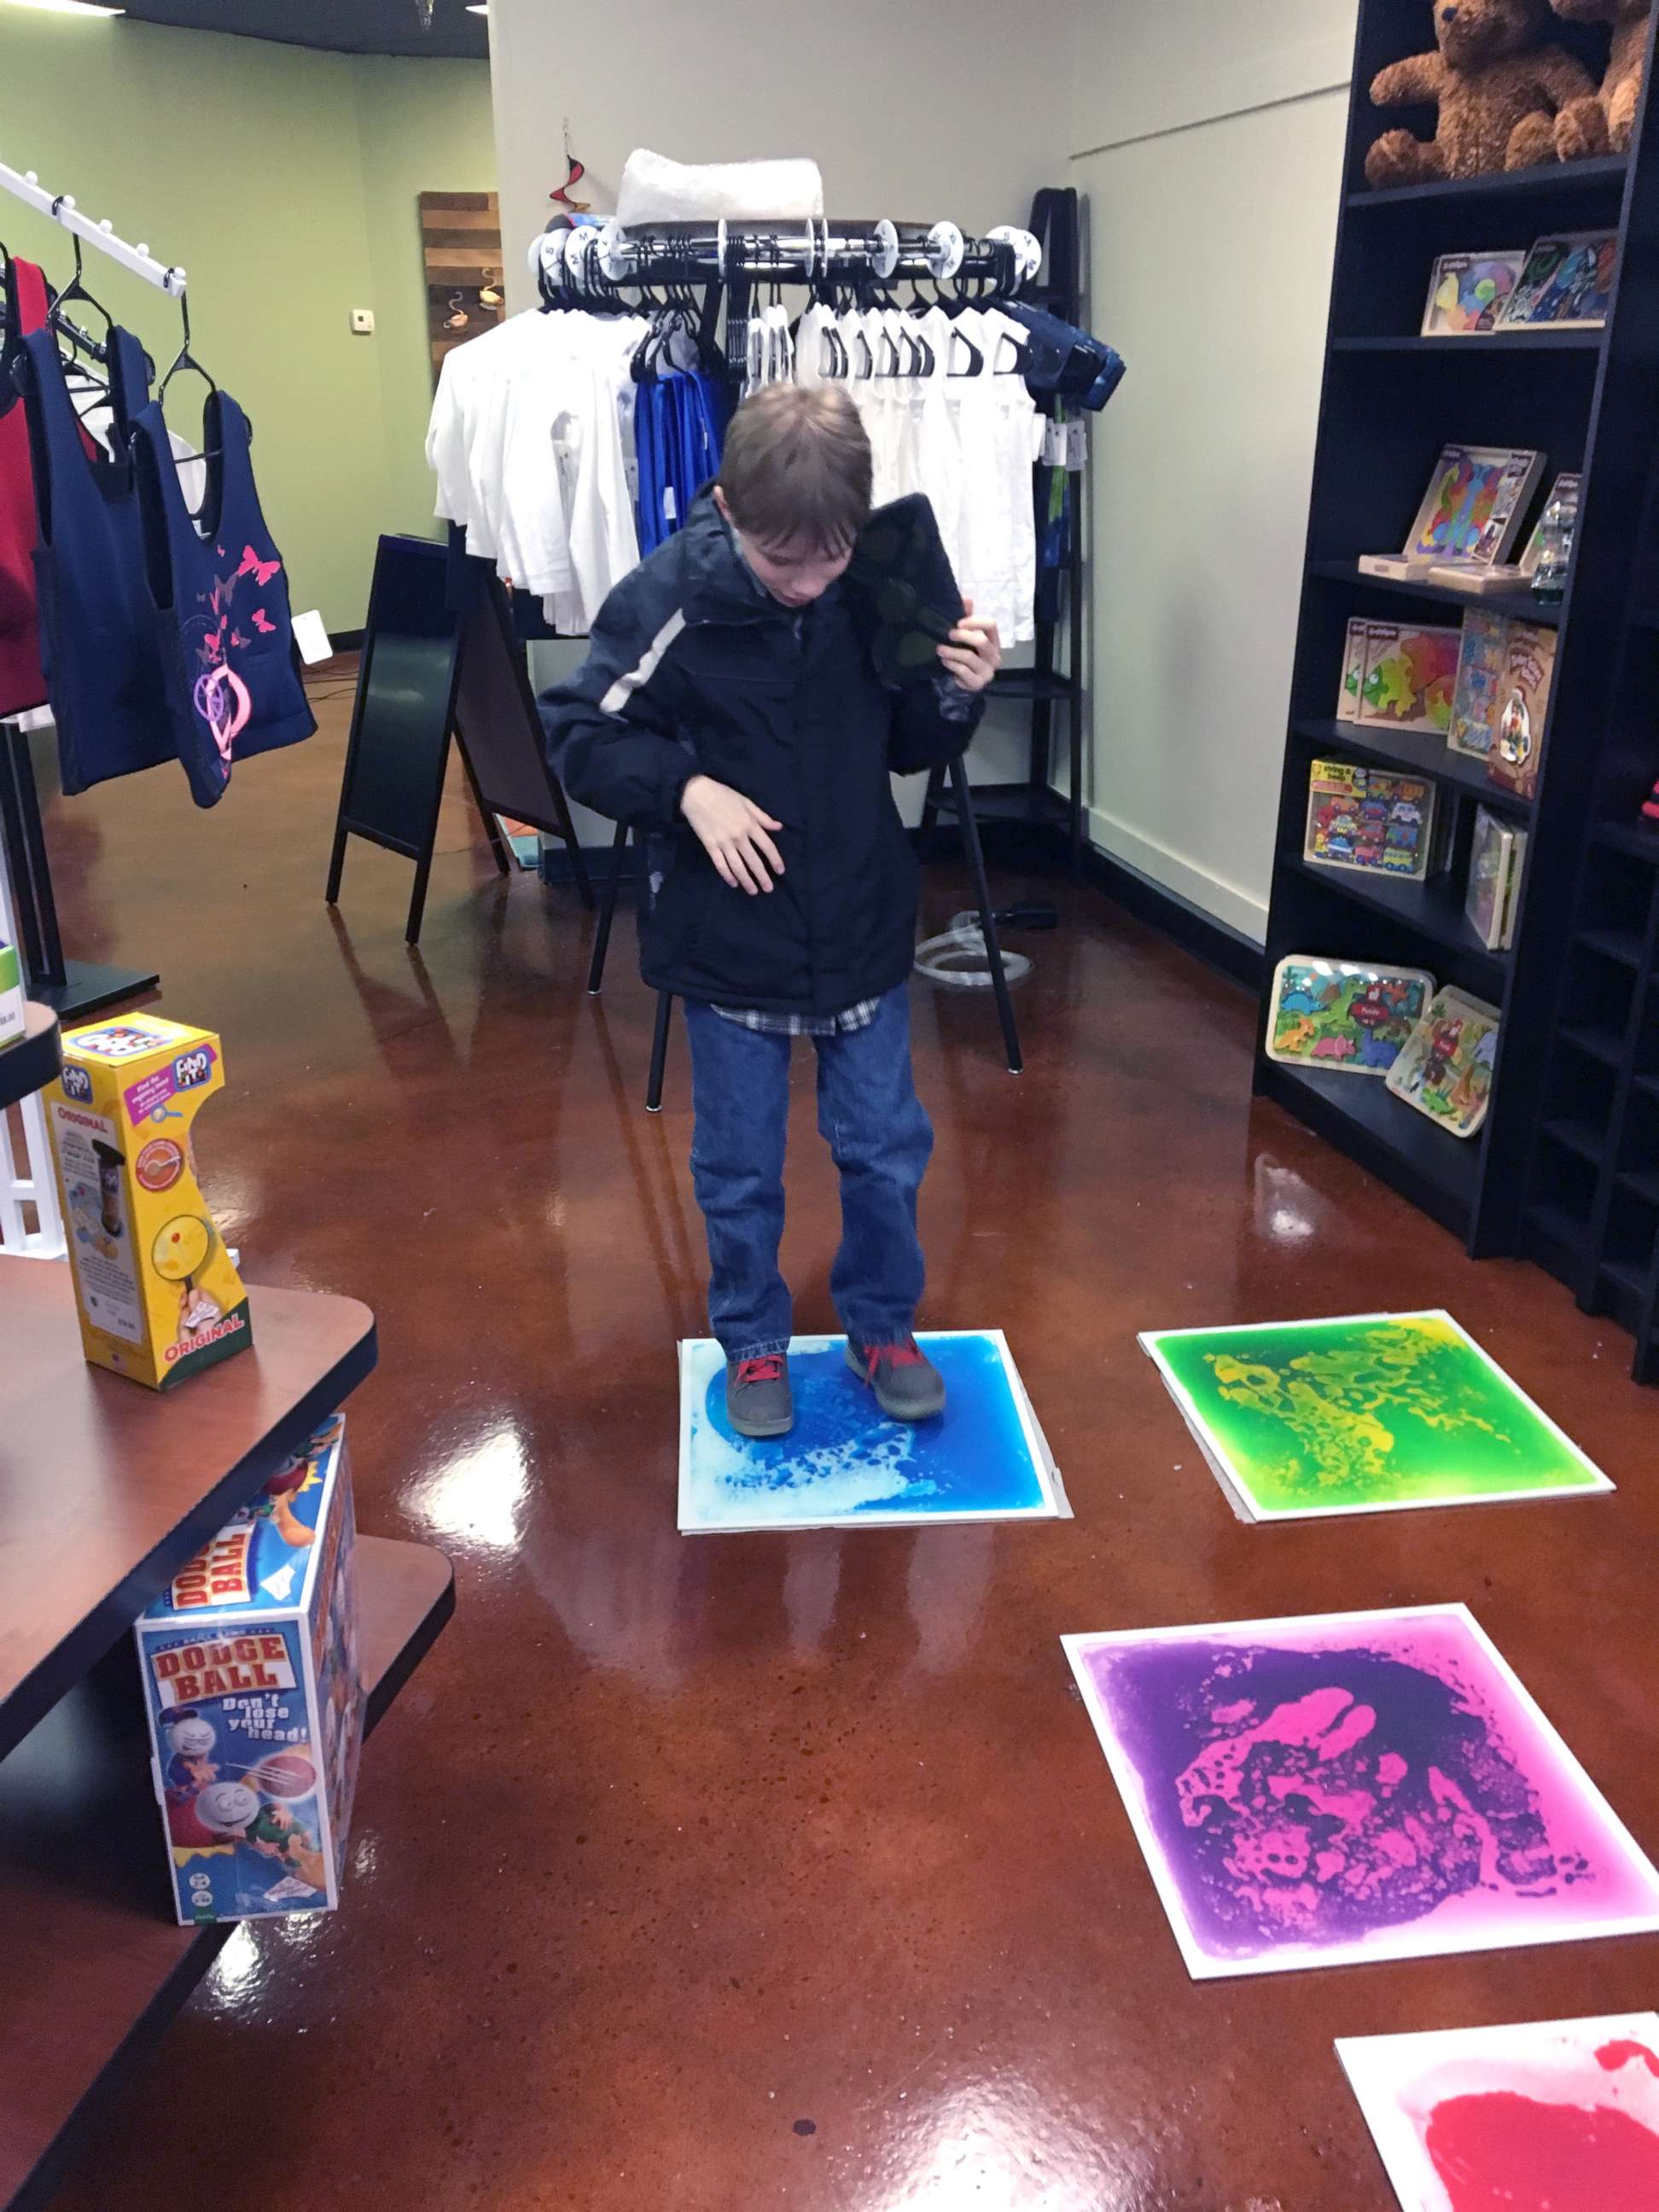 PHOTO: Parker Kahle, 13, enjoys an activity inside the Puzzle Pieces toy shop in Ohio.